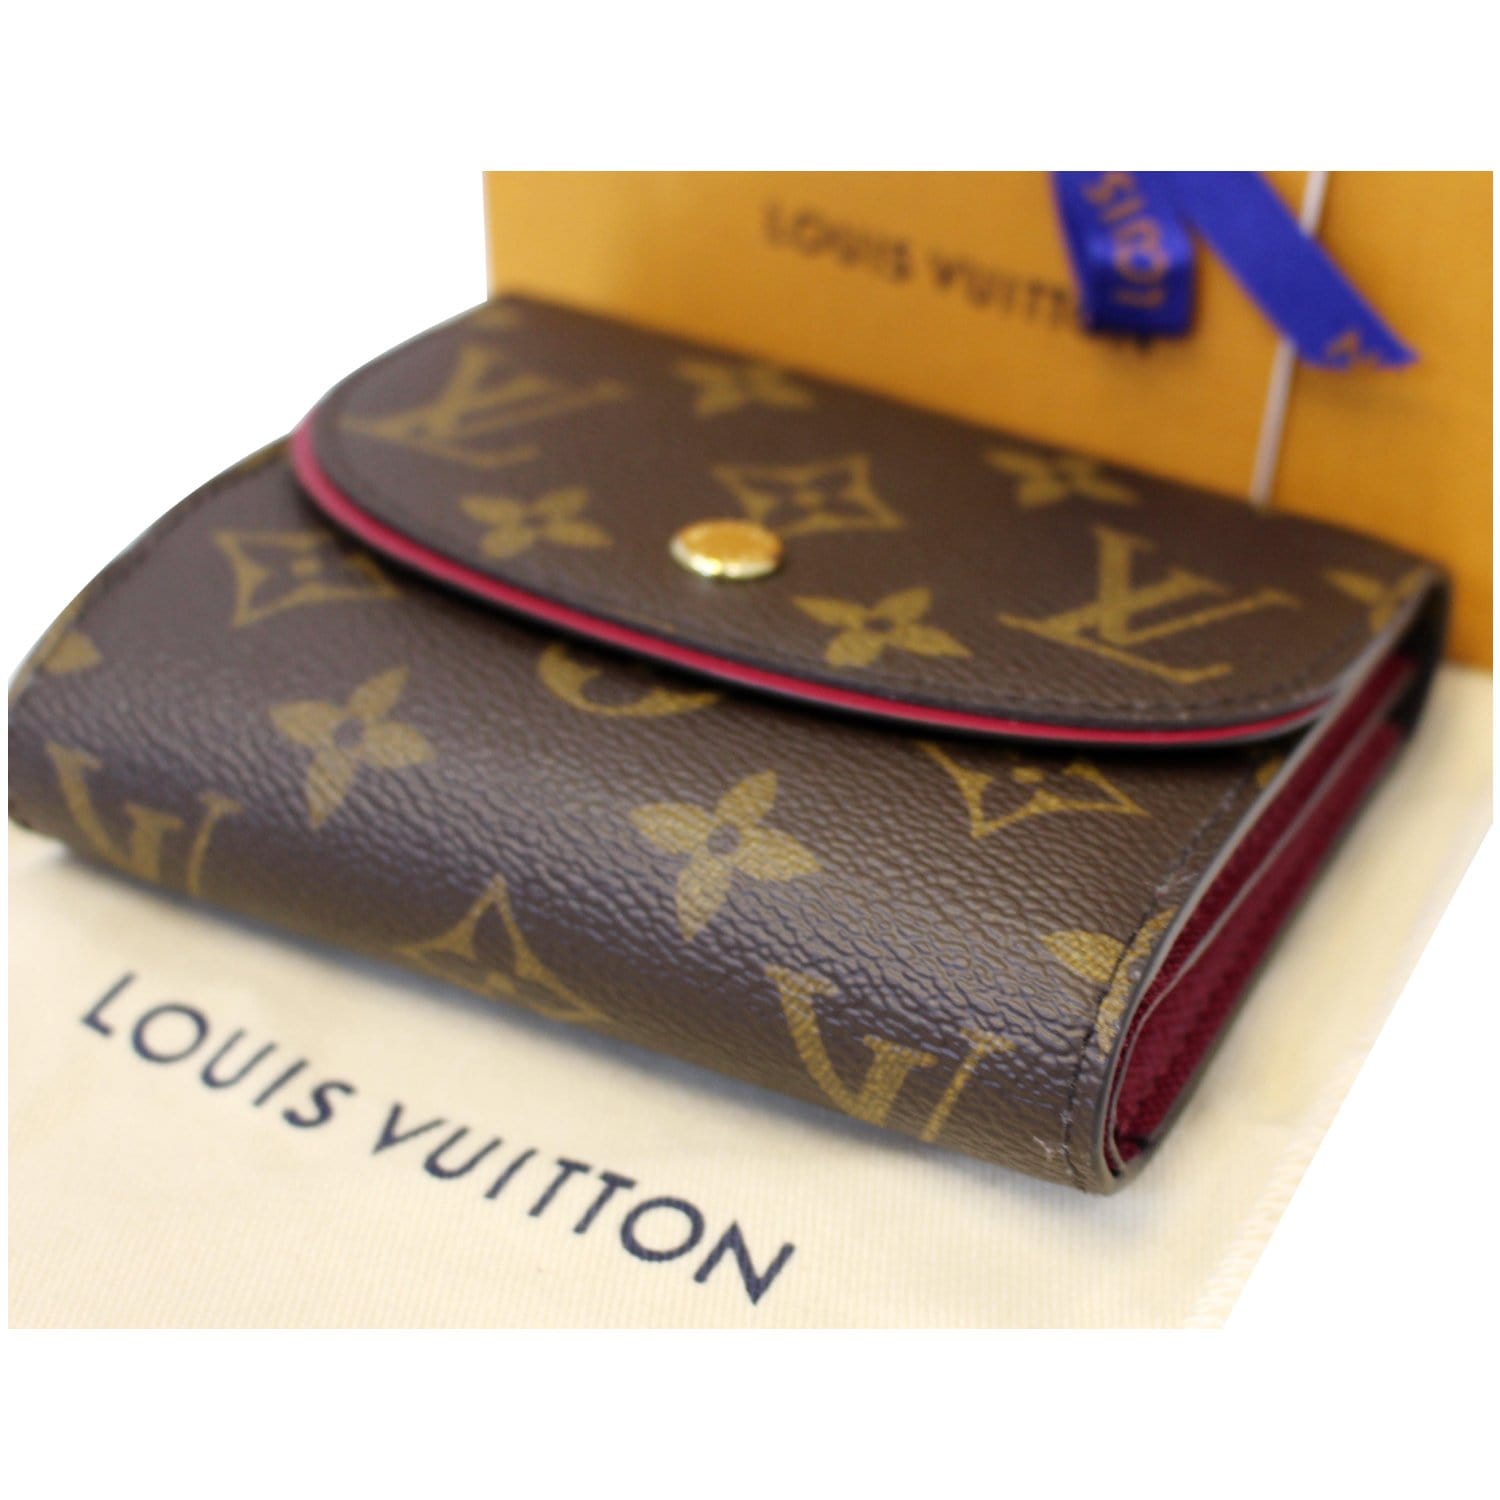 Louis Vuitton Ariane Compact Purse Wallet in Monogram Fuchsia - SOLD